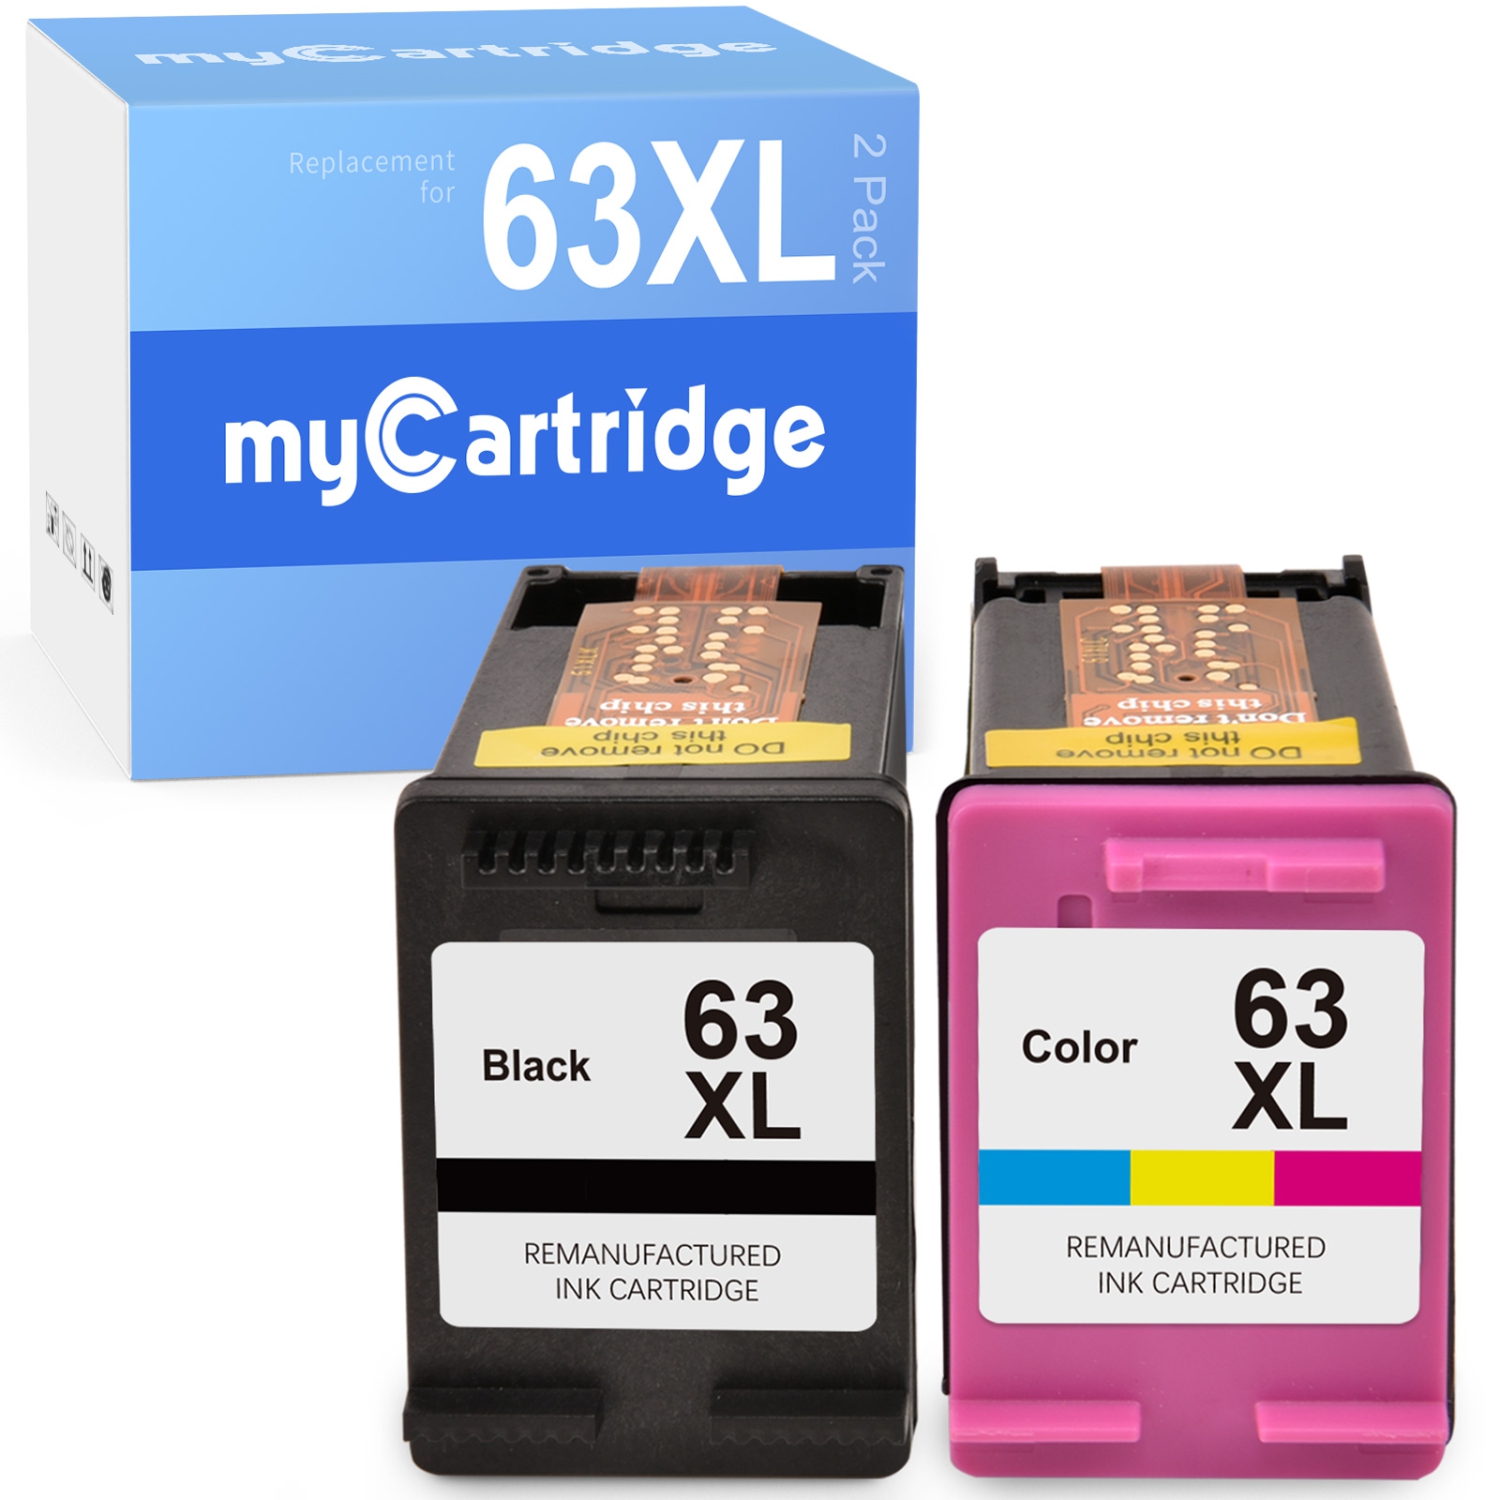 63XL Ink Cartridge HP63XL Work with HP Deskjet 3632 3631 Envy 4520 Officejet 3830 4650 5255 3830 5258 4655 5252 (1 Black, 1 Tri-Color)